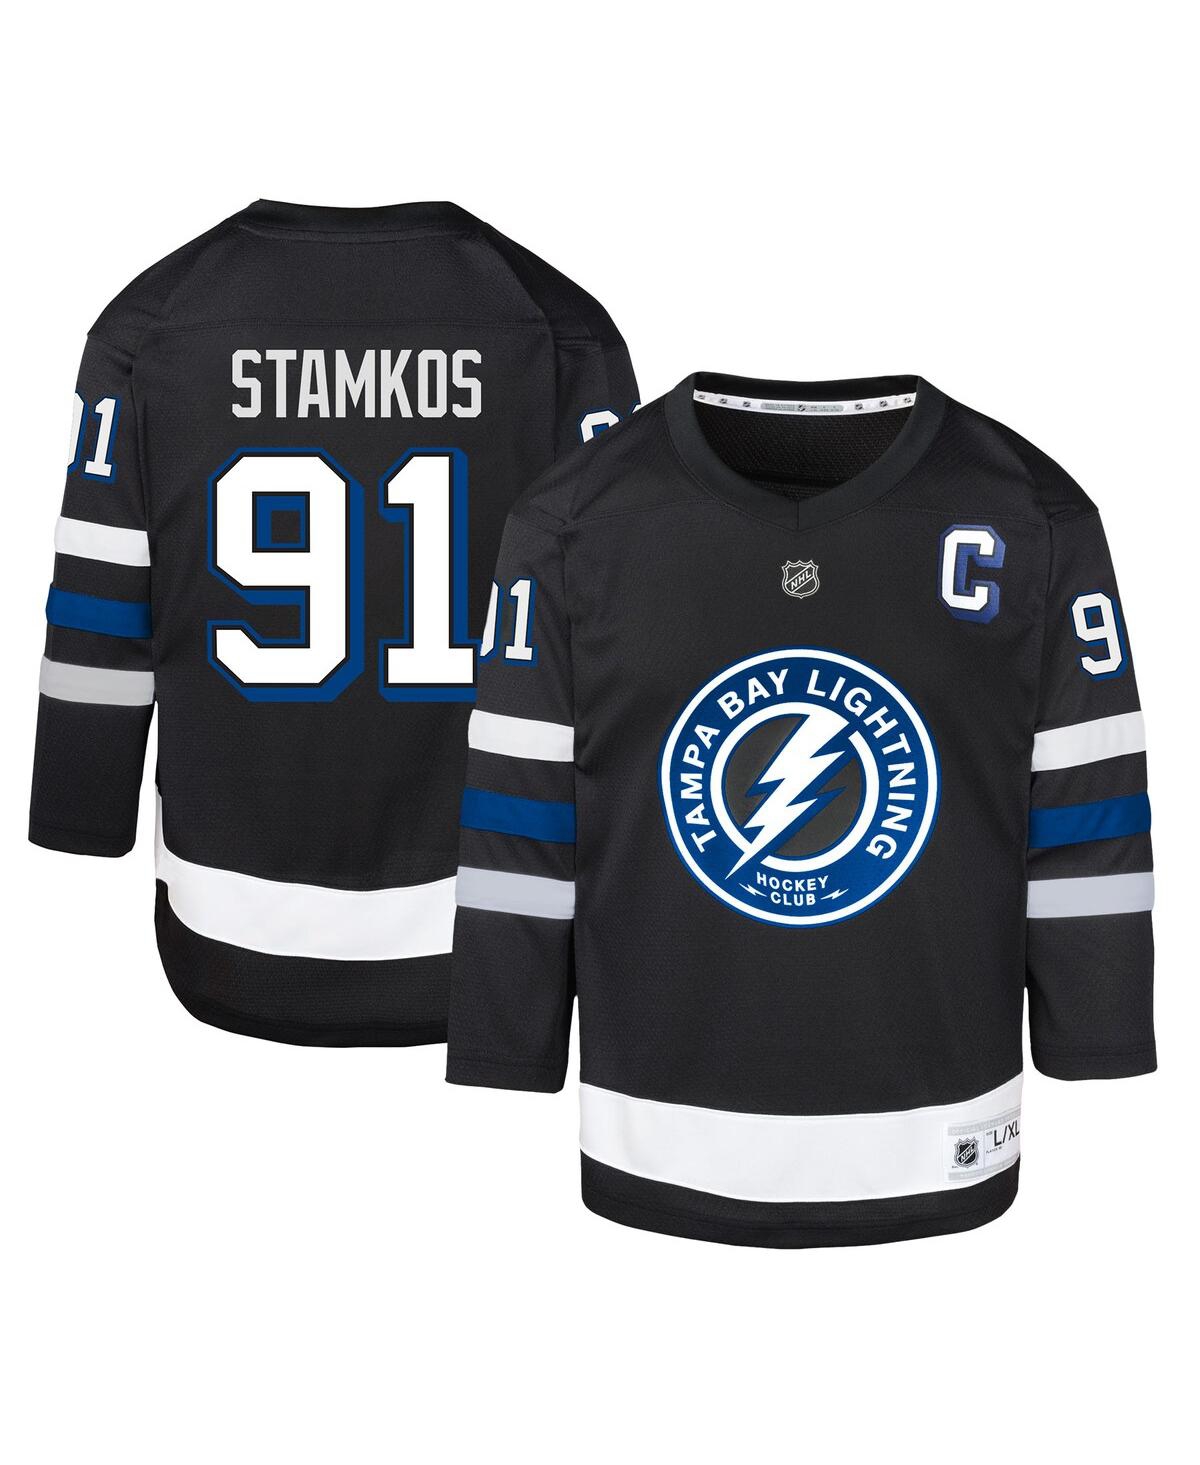 Youth Steven Stamkos Black Tampa Bay Lightning Alternate Replica Player Jersey